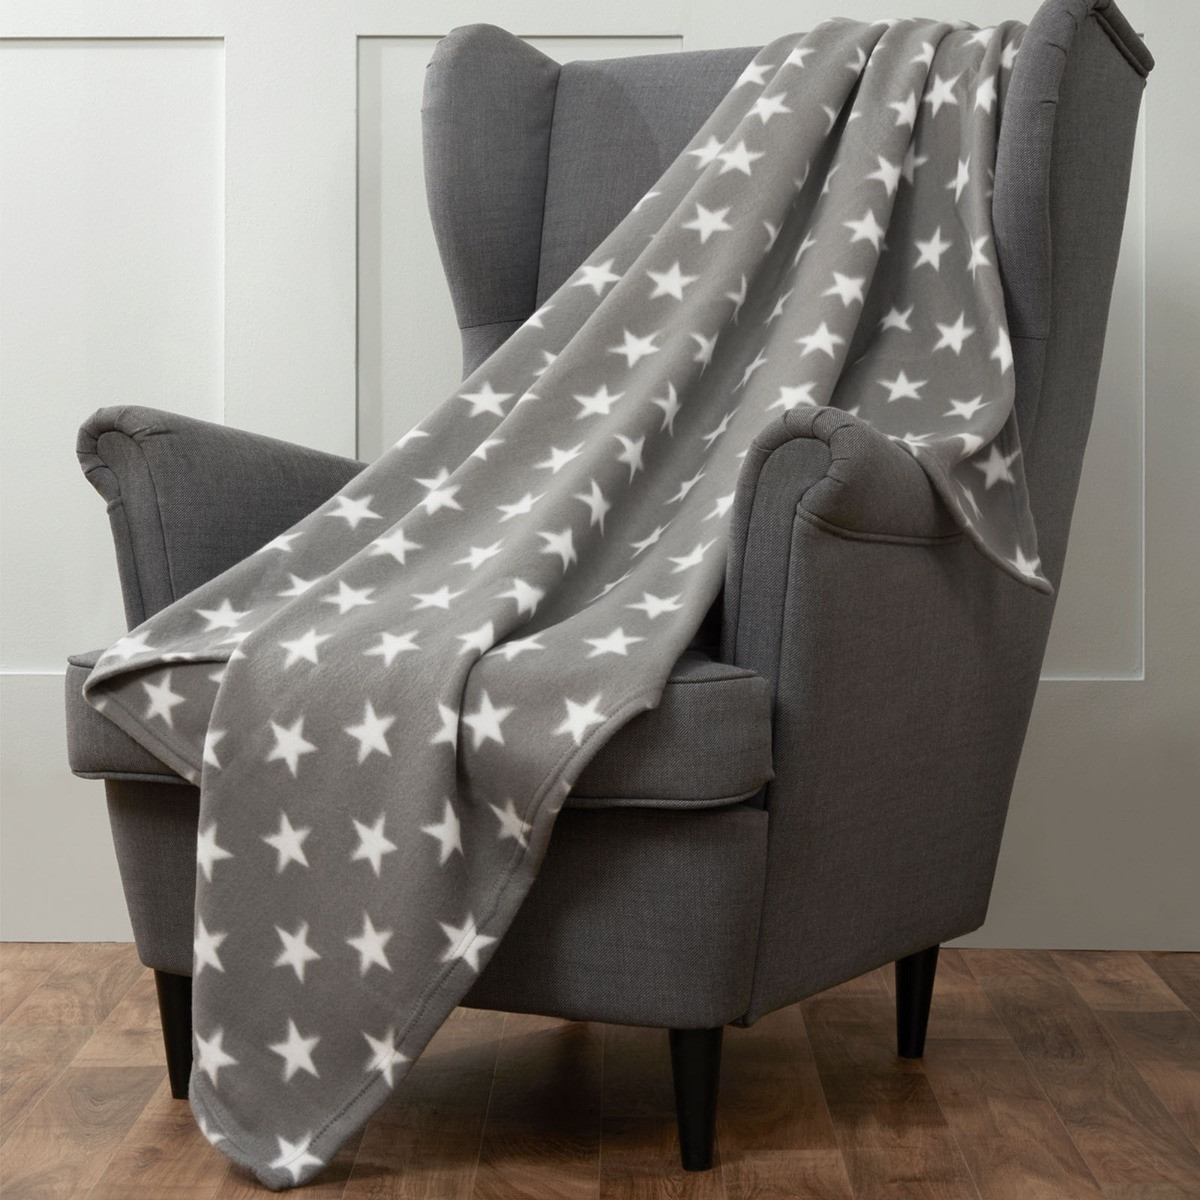 Dreamscene by OHS Star Print Fleece Throw Blanket, Grey - 120 x 150cm>